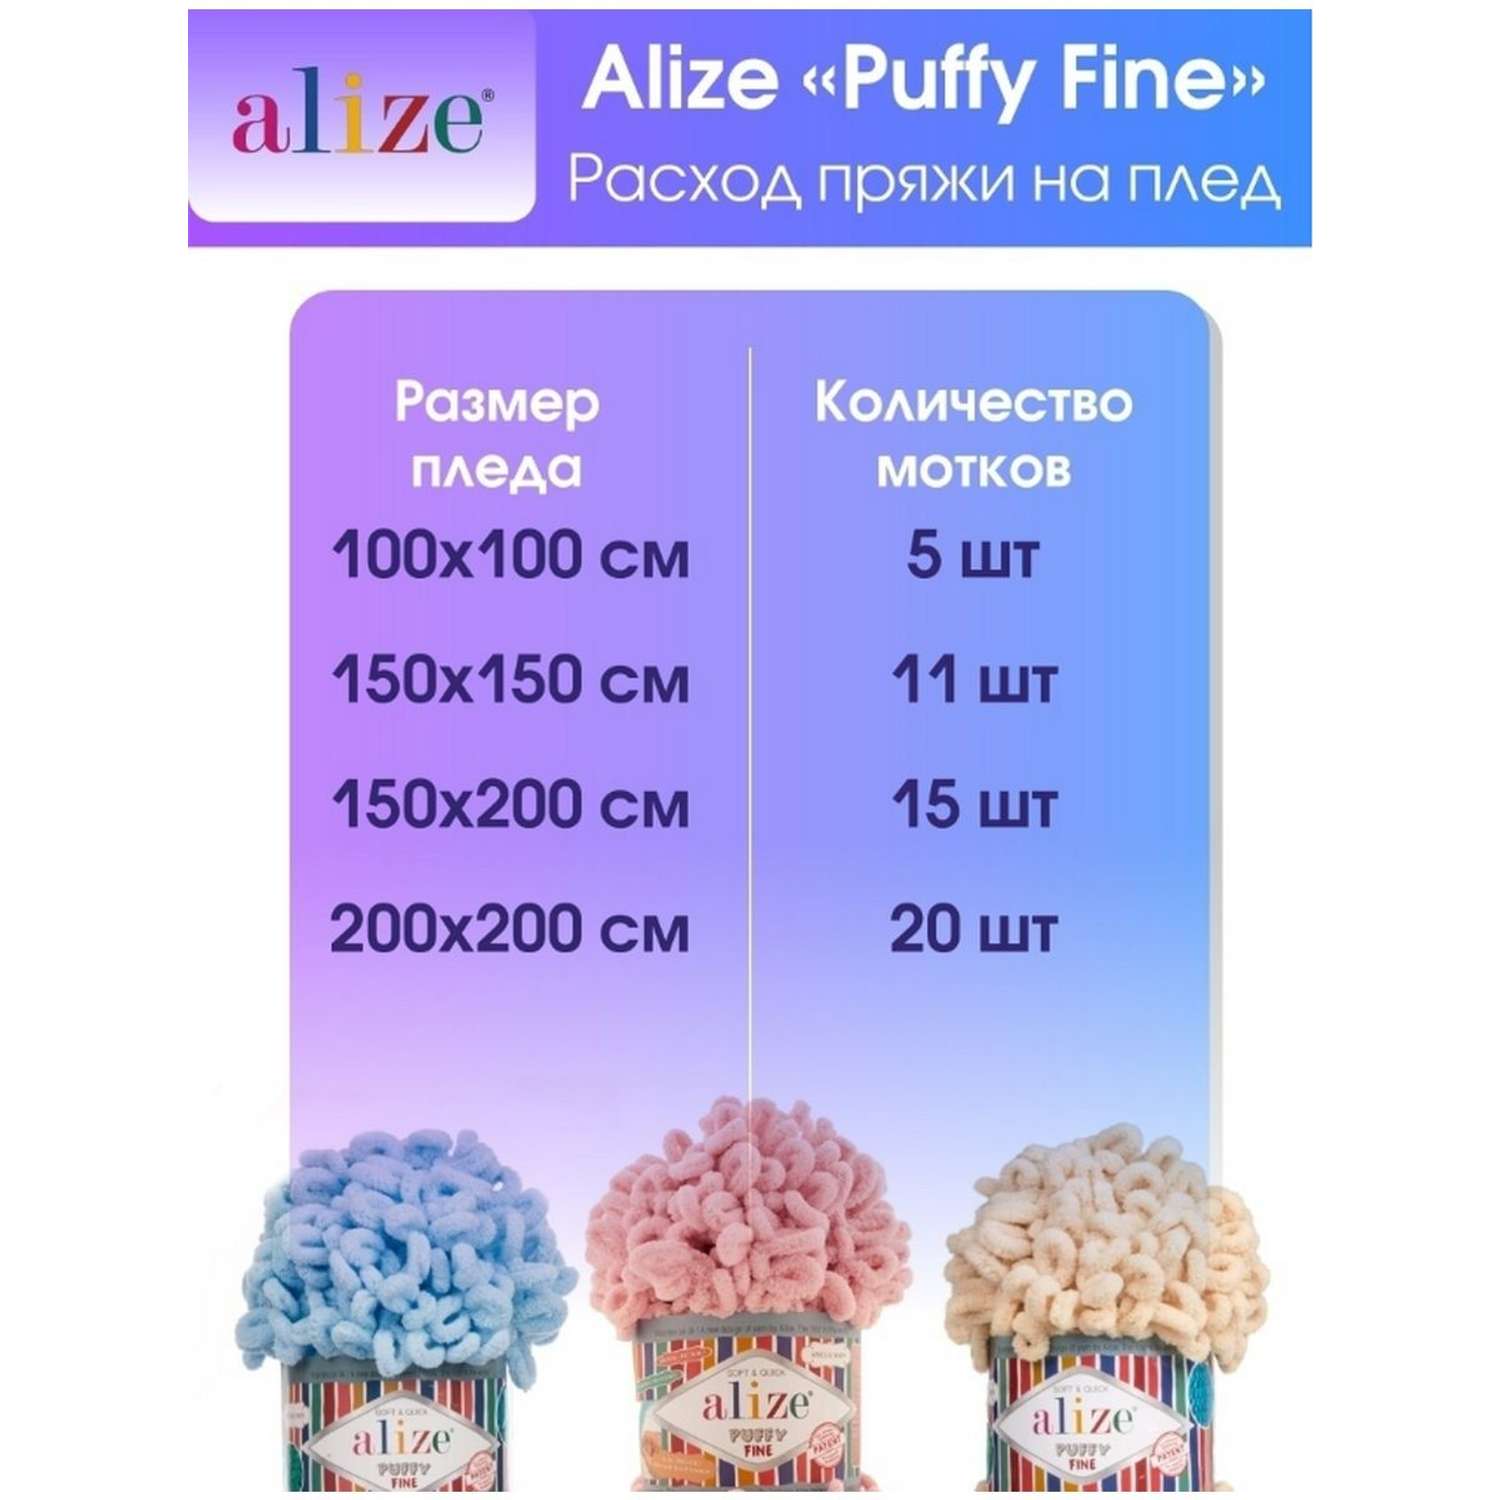 Пряжа для вязания Alize puffy fine 100 г 14.5 м микрополиэстер фантазийная мягкая 415 песочный 5 мотков - фото 7